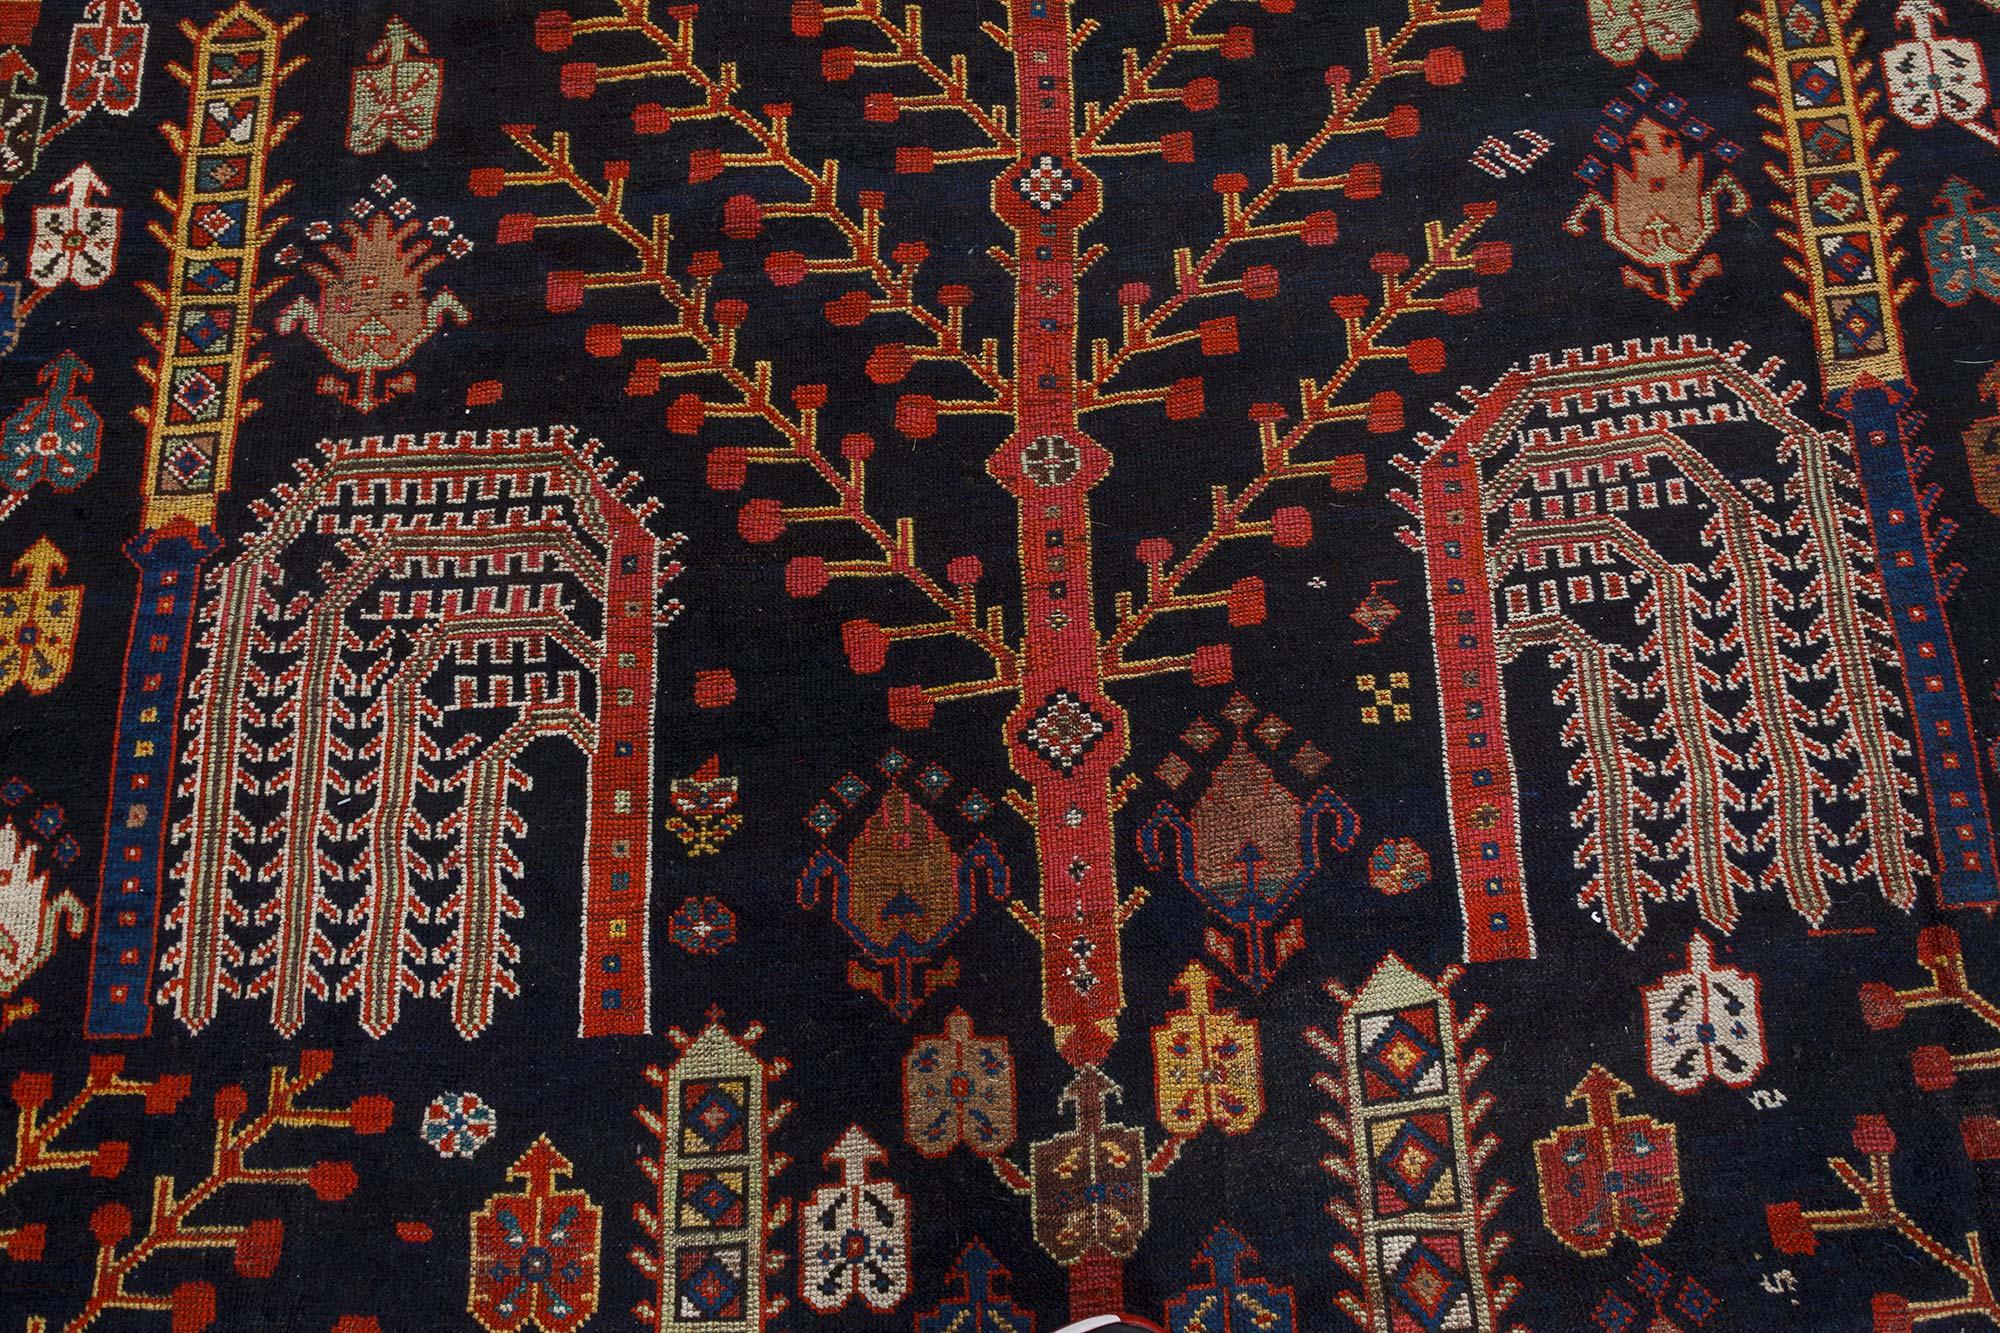 Authentic Persian Bakhtiari red handmade wool rug
Size: 12'0